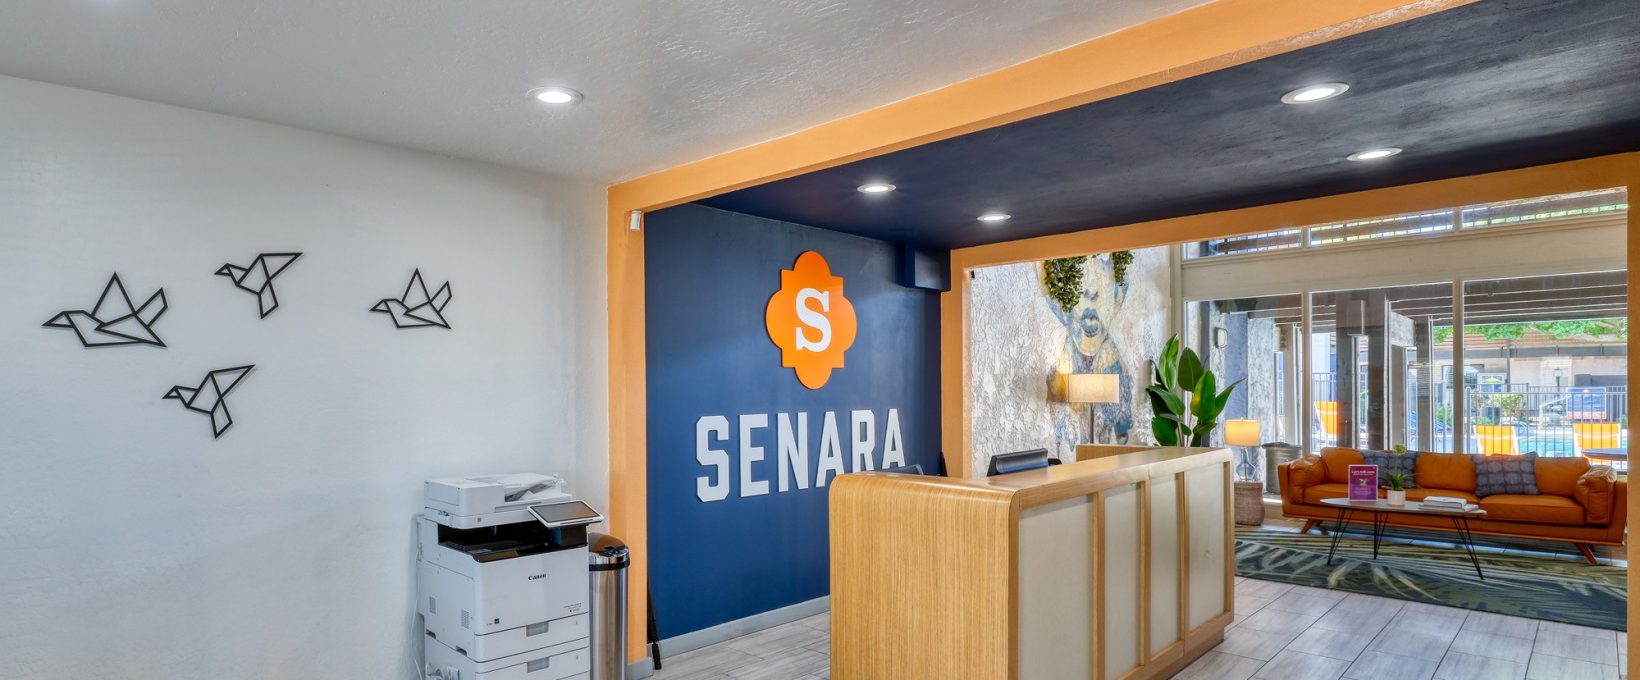 the lobby of a hotel with a sign that says sena at The Senara